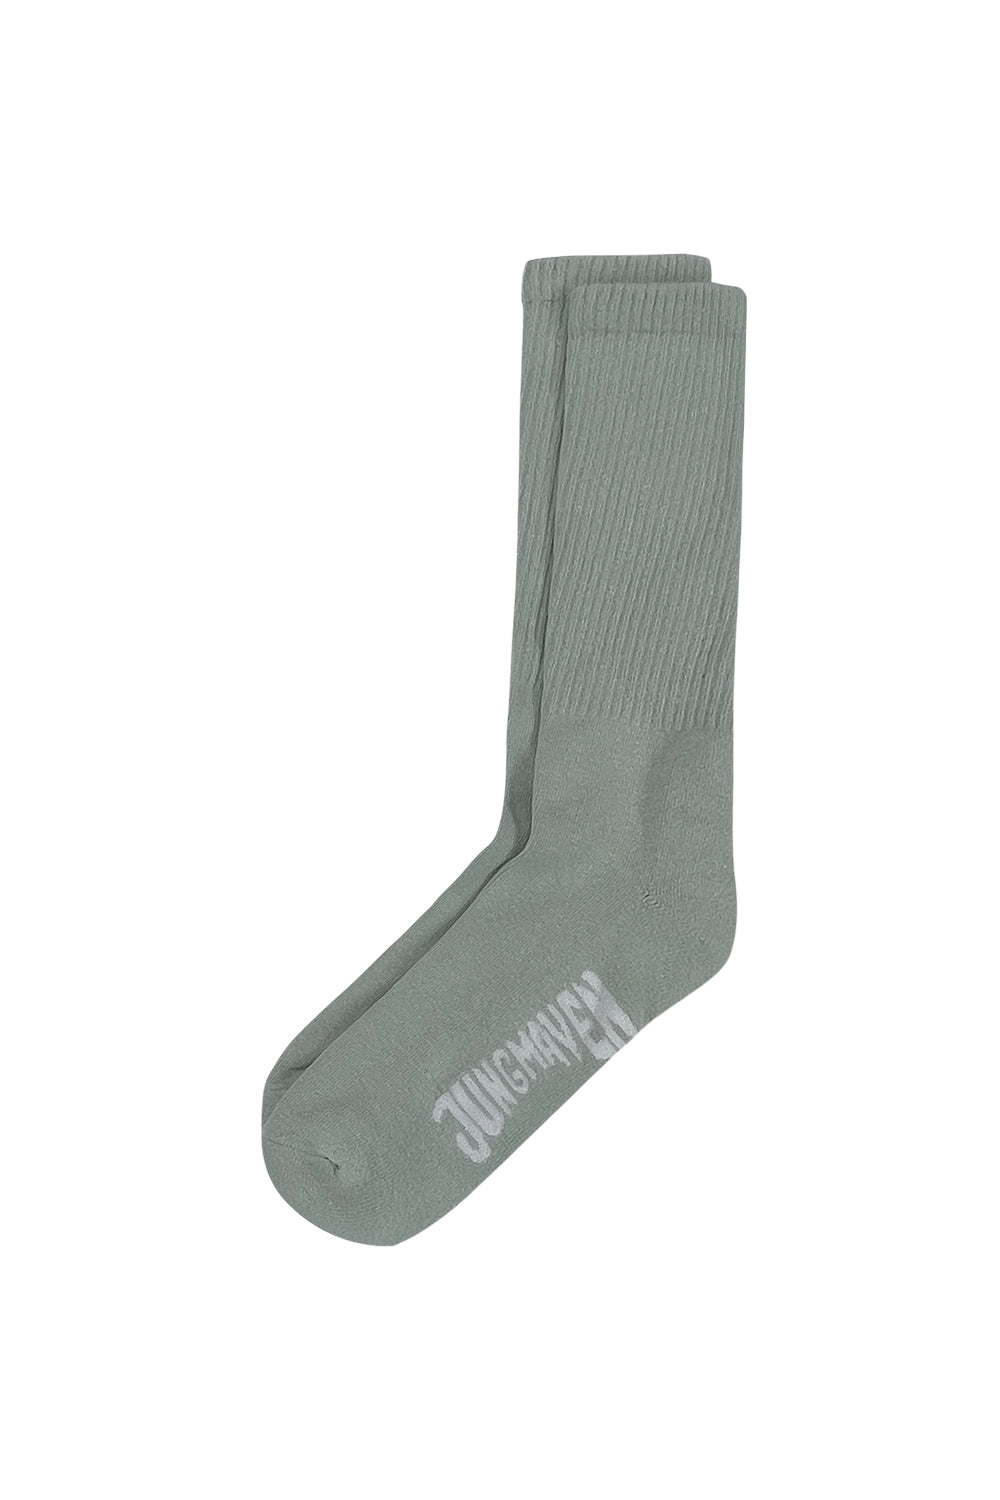 Hemp Crew Socks | Jungmaven Hemp Clothing & Accessories / Color: Seafoam Green